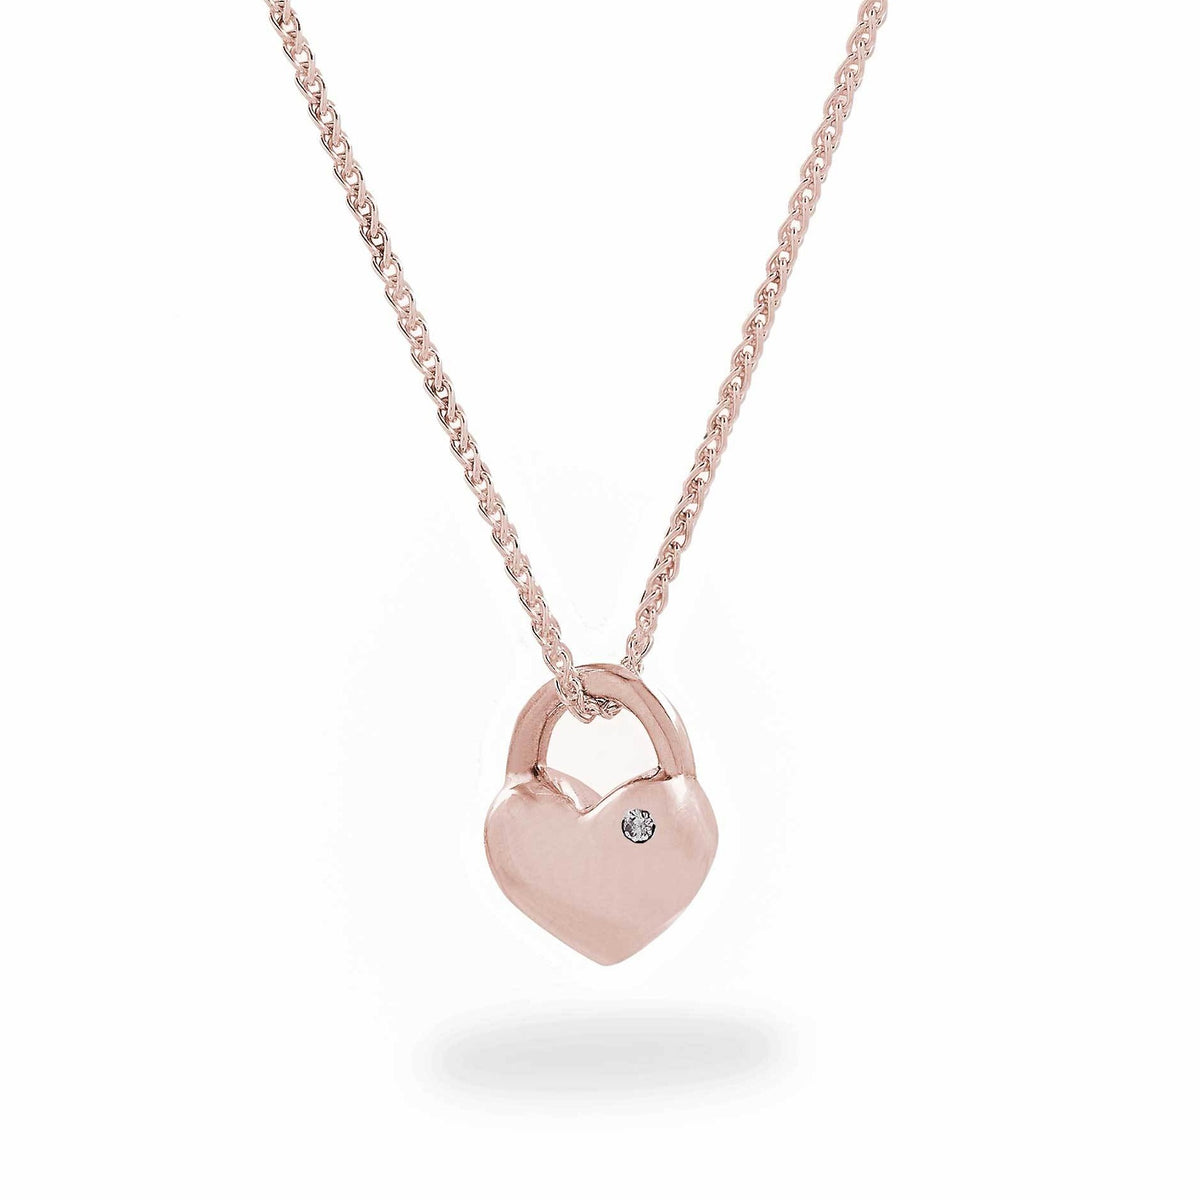 Rose gold heart necklace with diamond scarlett jewellery